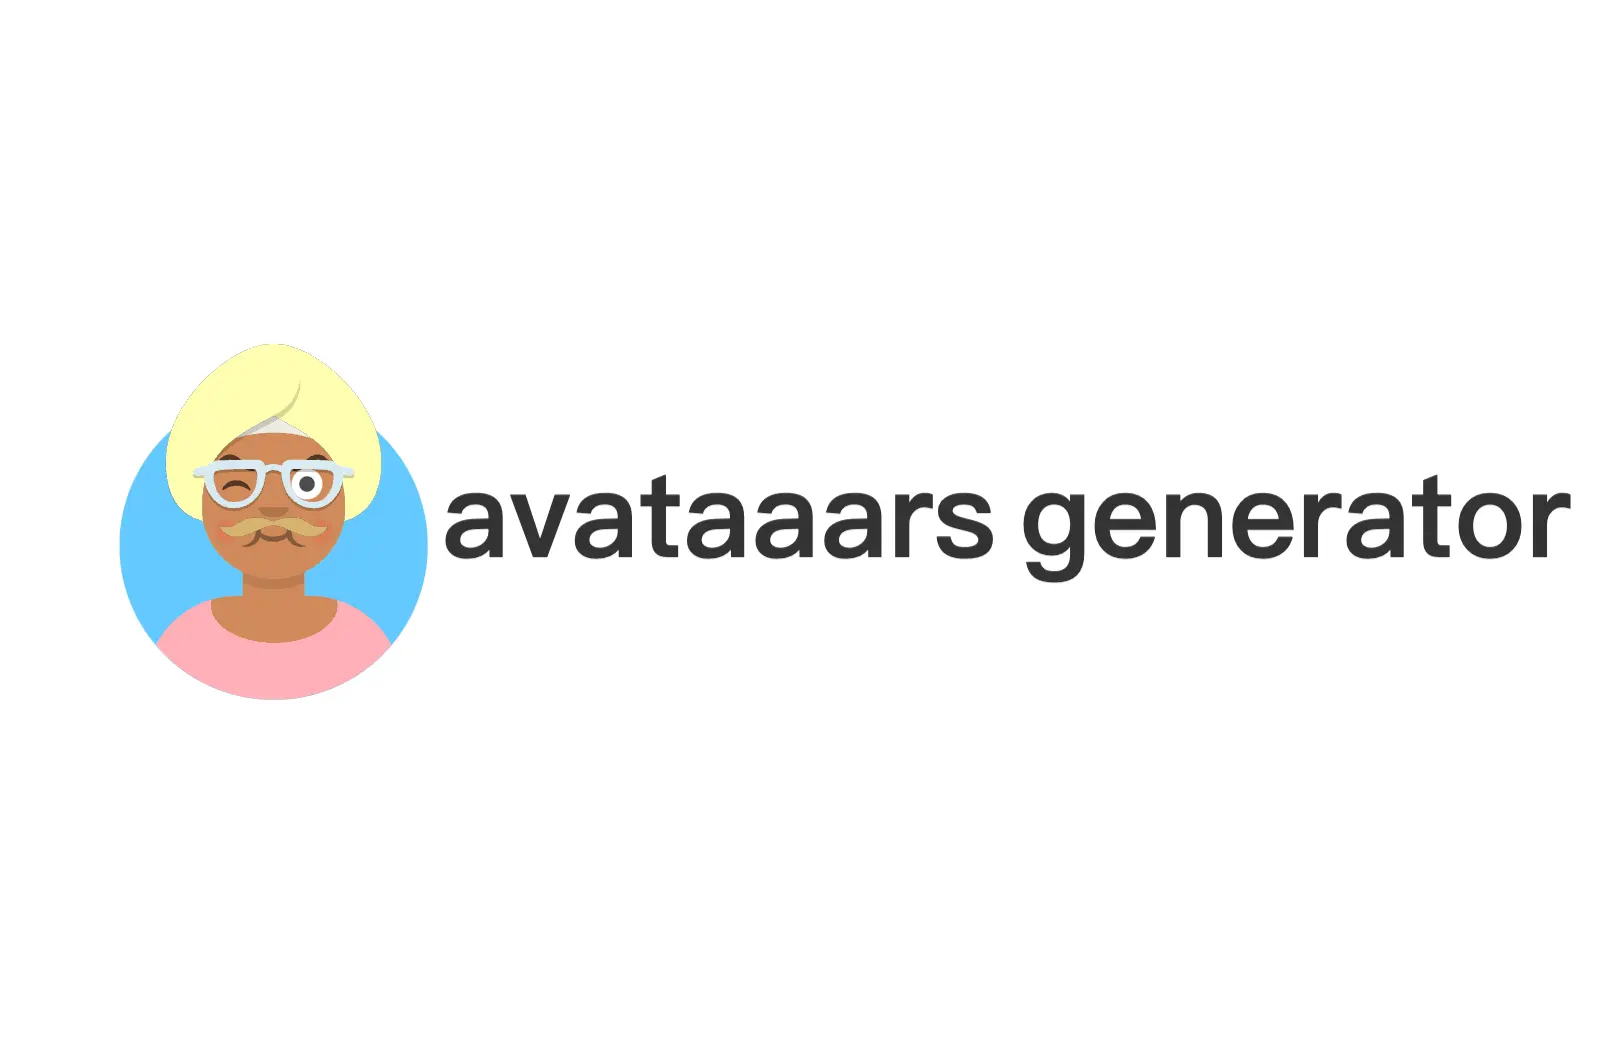 Avatar generation